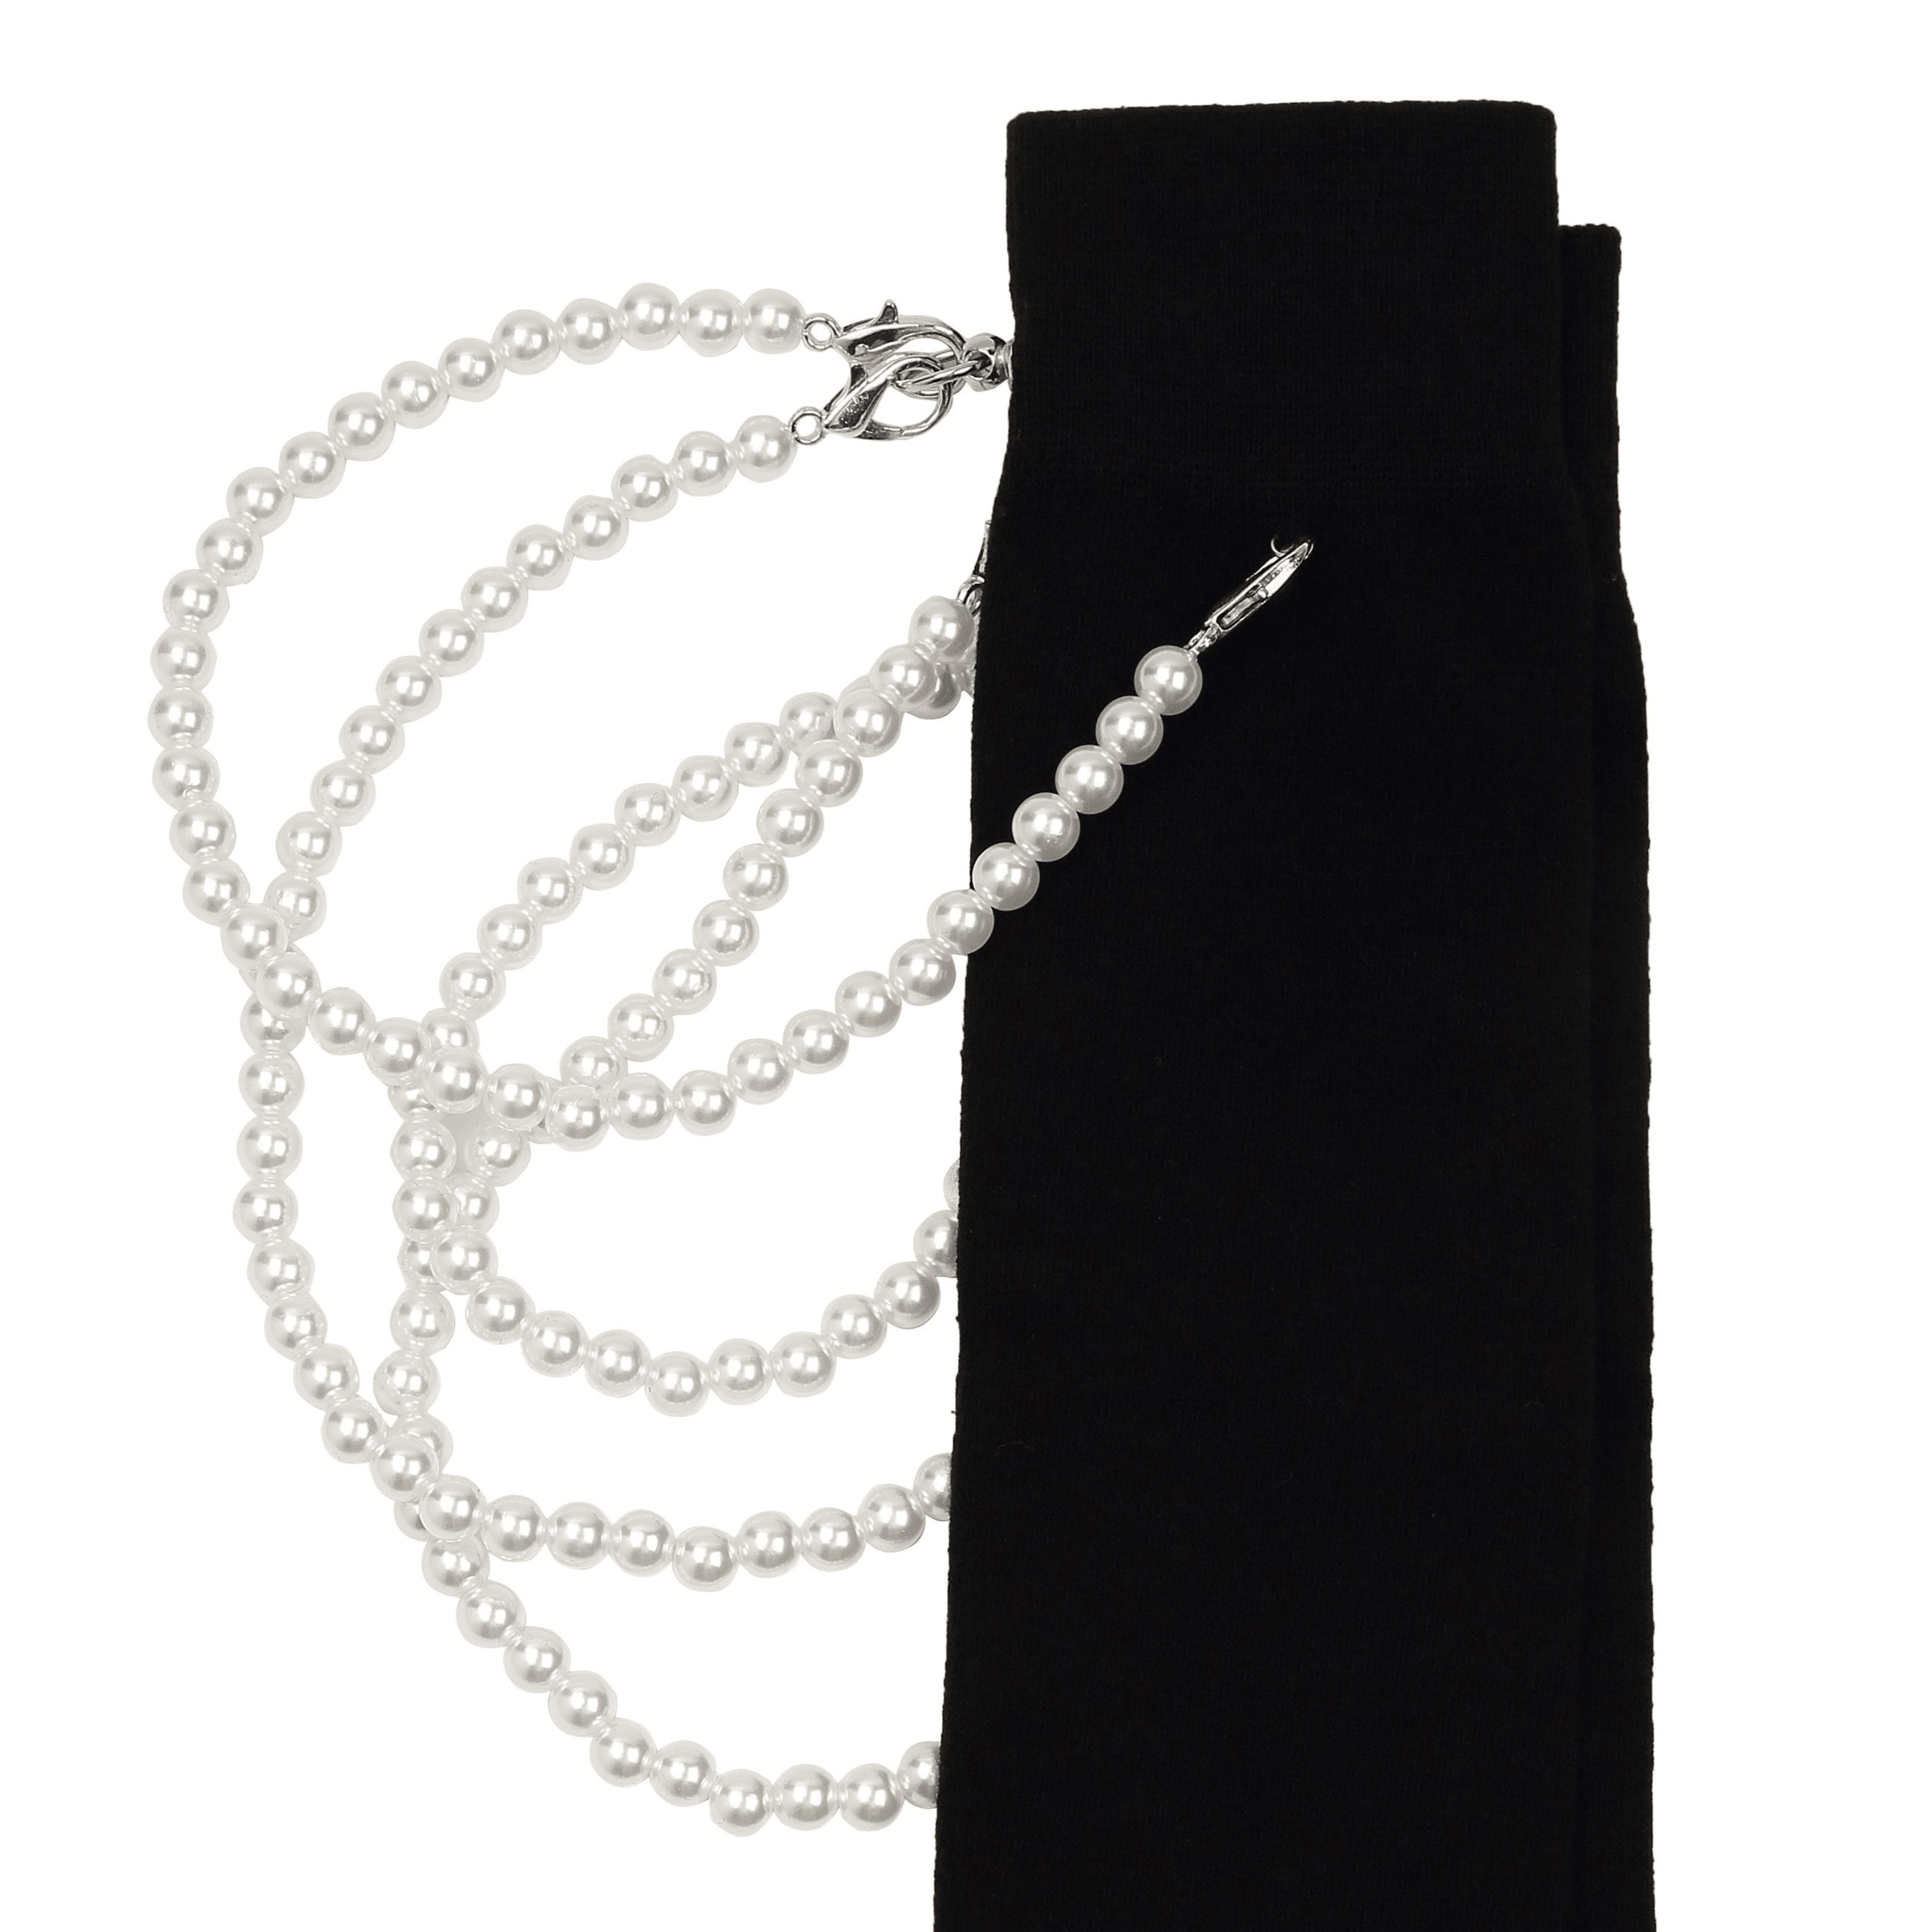 Detachable Pearl Chain Black Cotton Long Socks - Uniqvibe